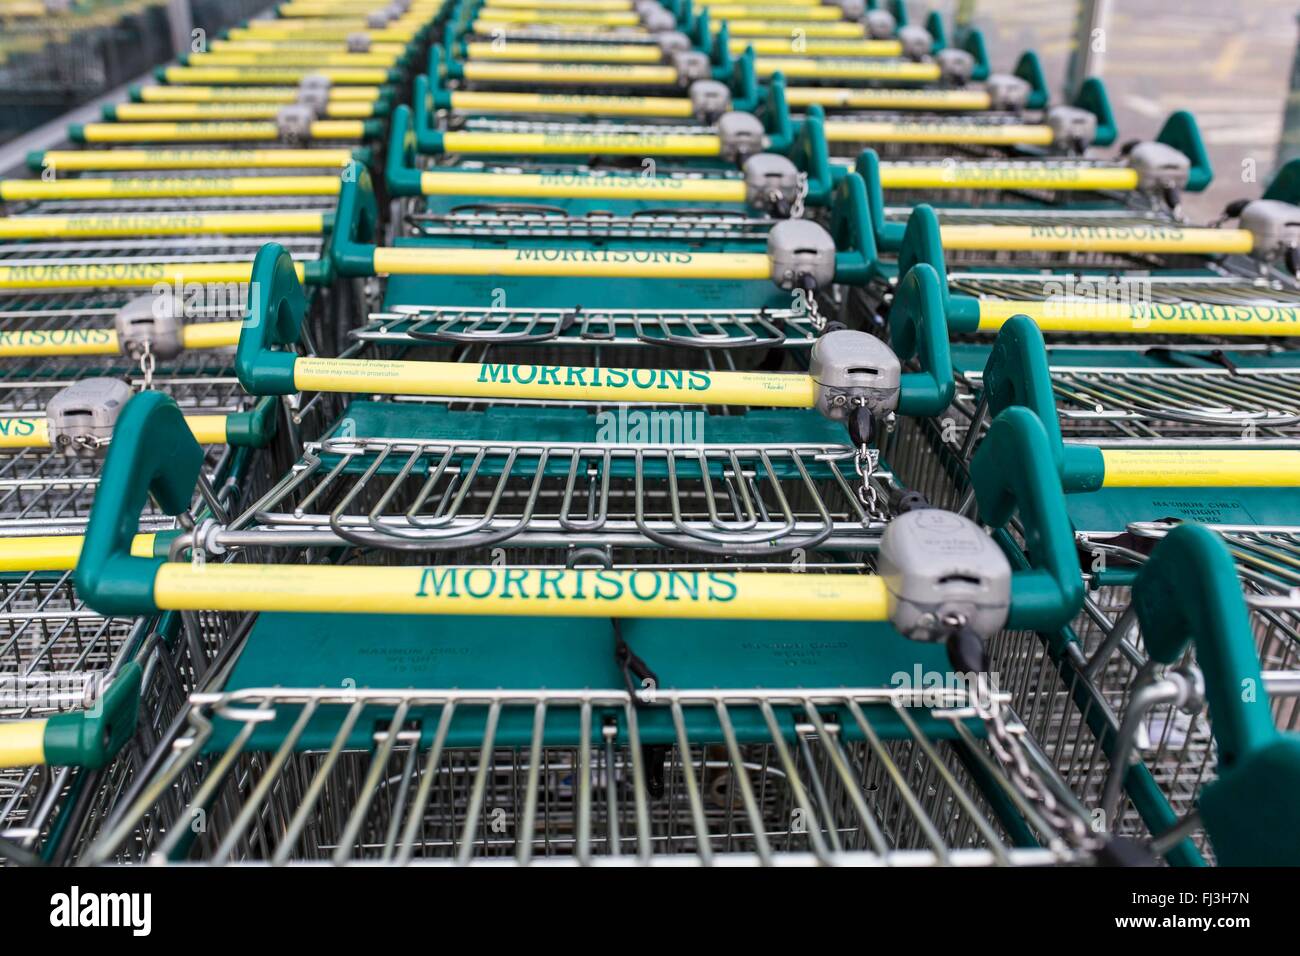 Morrisons supermarket shopping trolleys Stock Photo